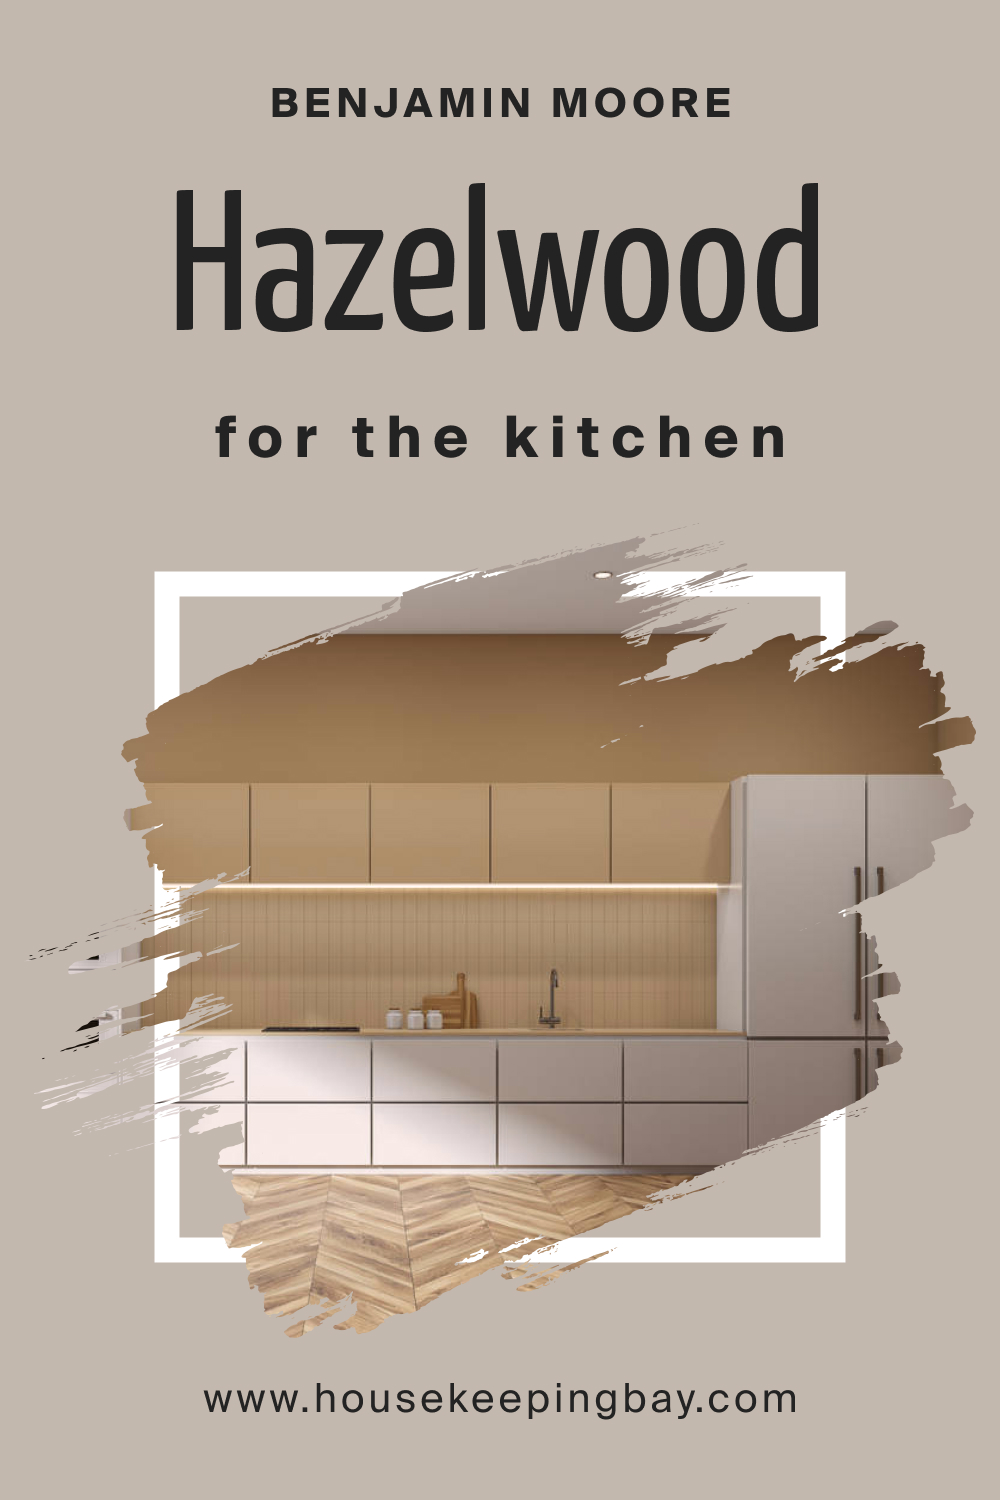 Benjamin Moore. BM Hazelwood 1005 for the Kitchen